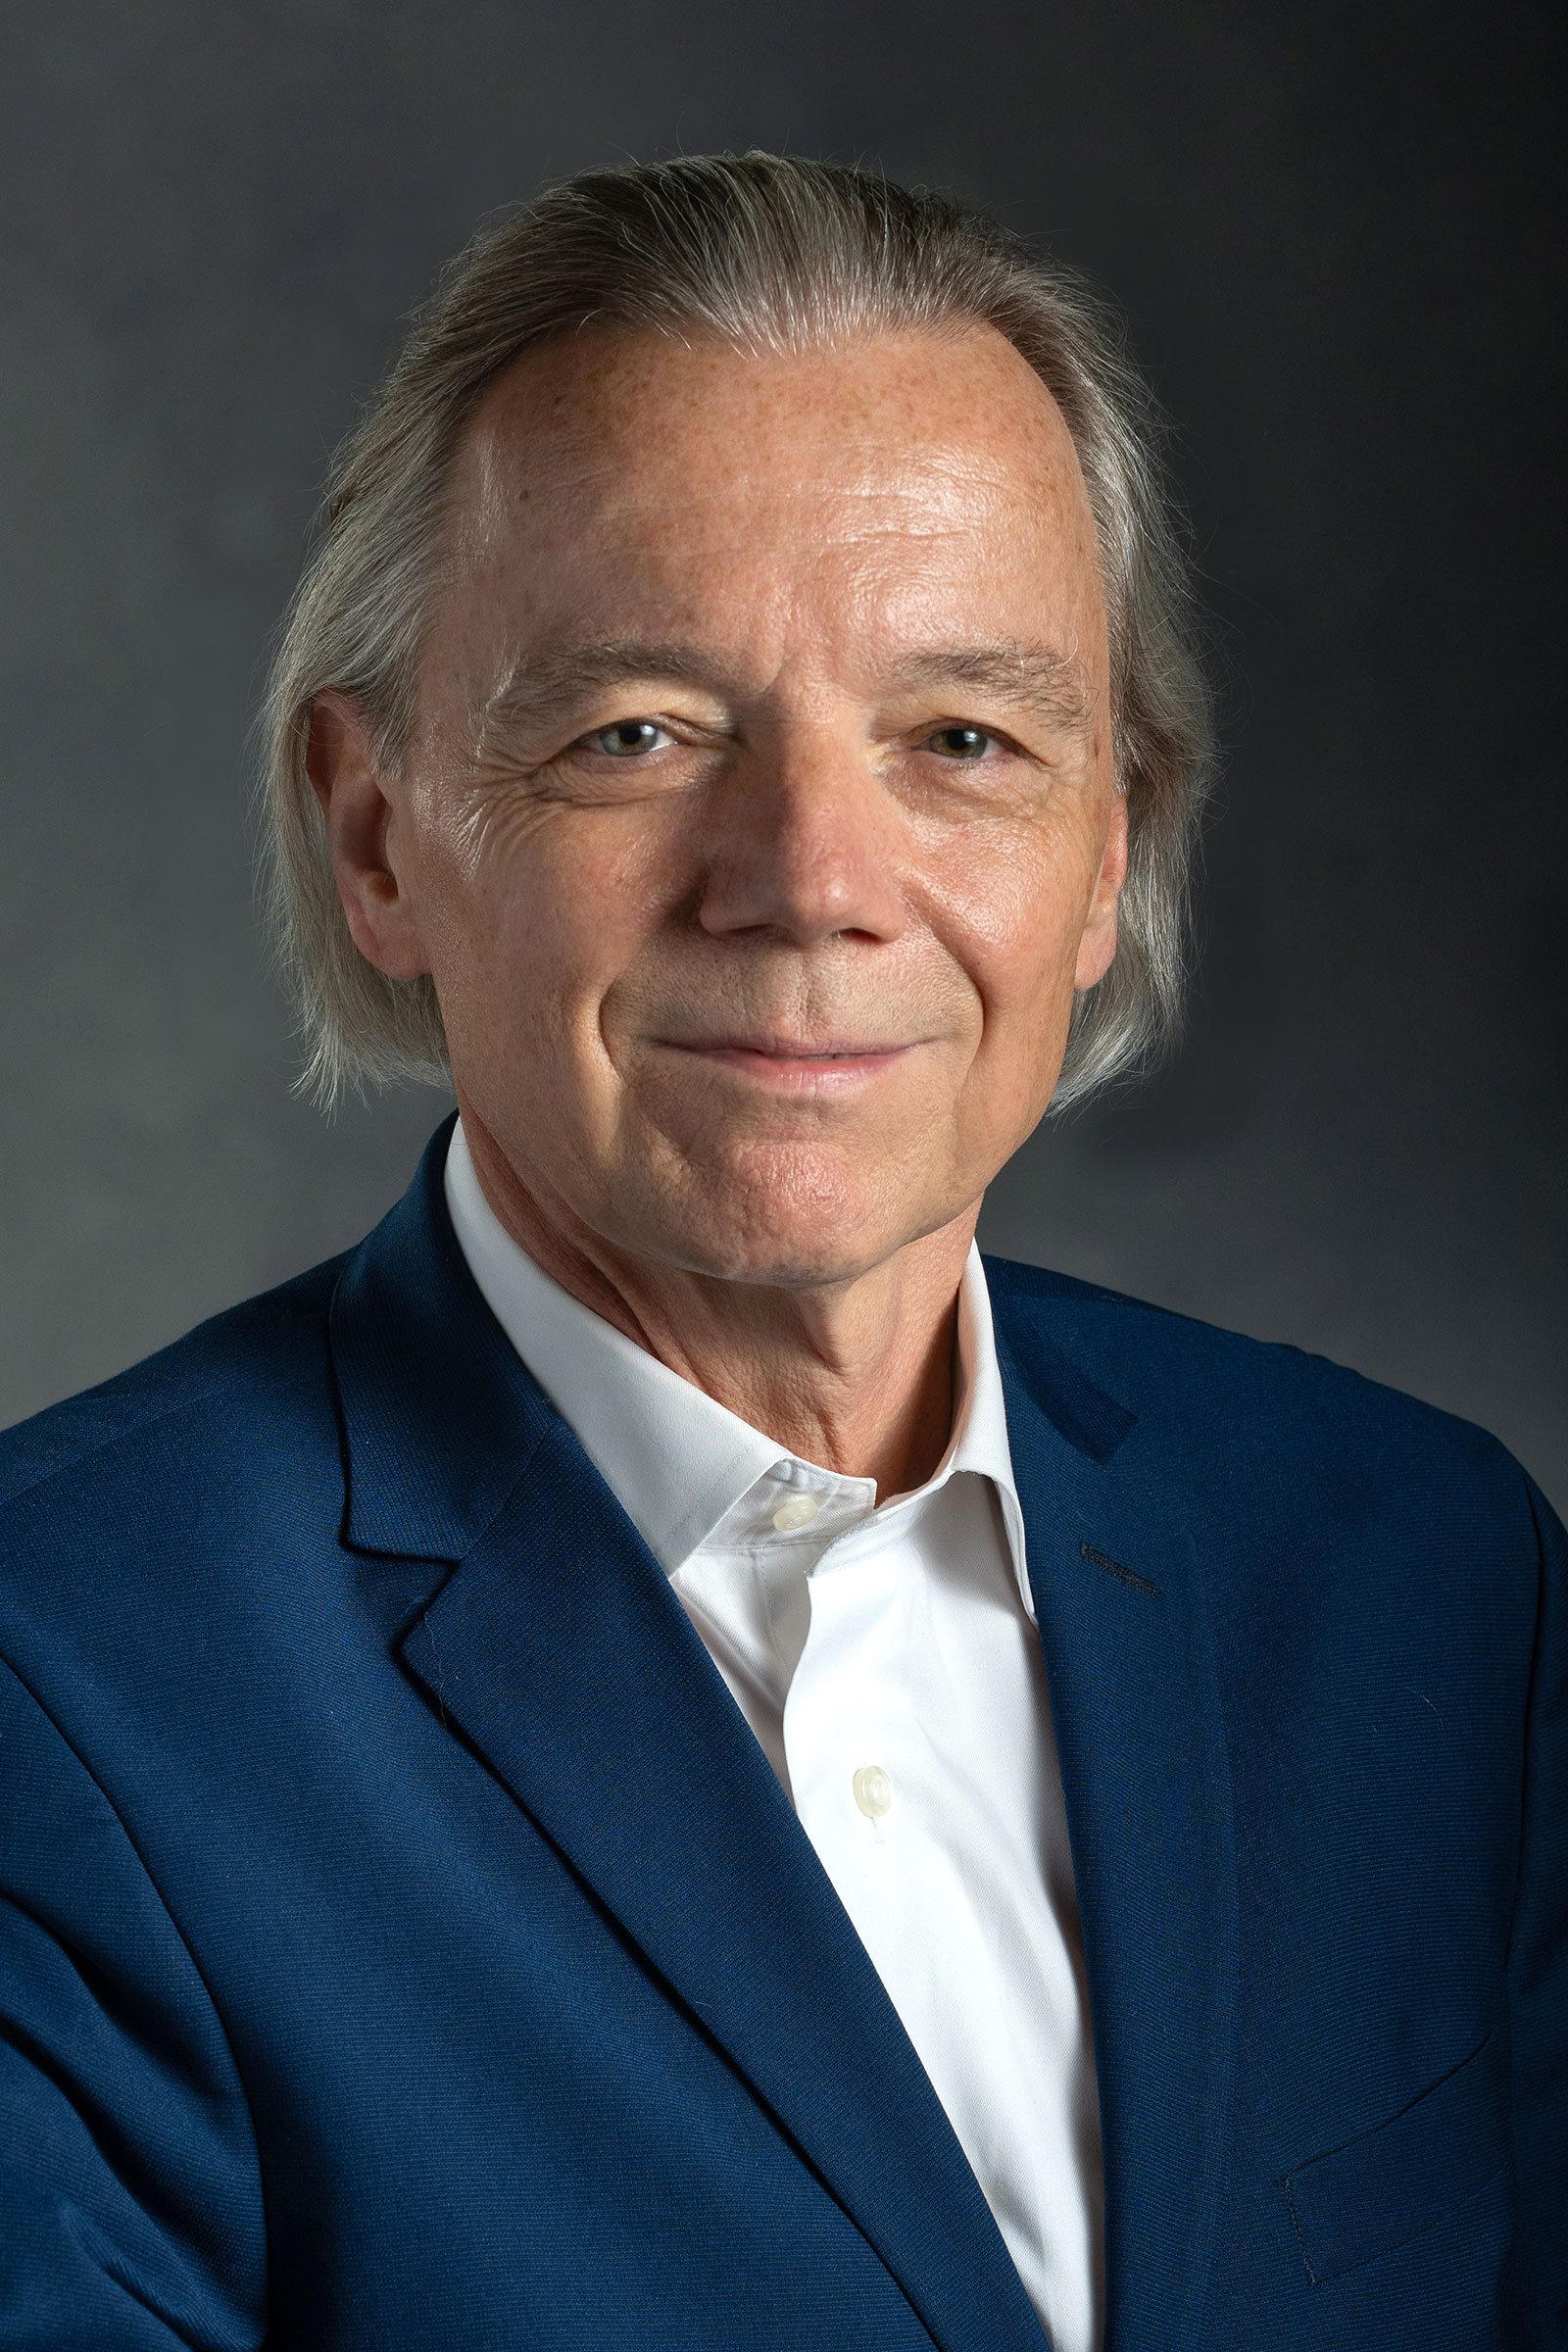 Johannes Bauer, Professor of Media and Information